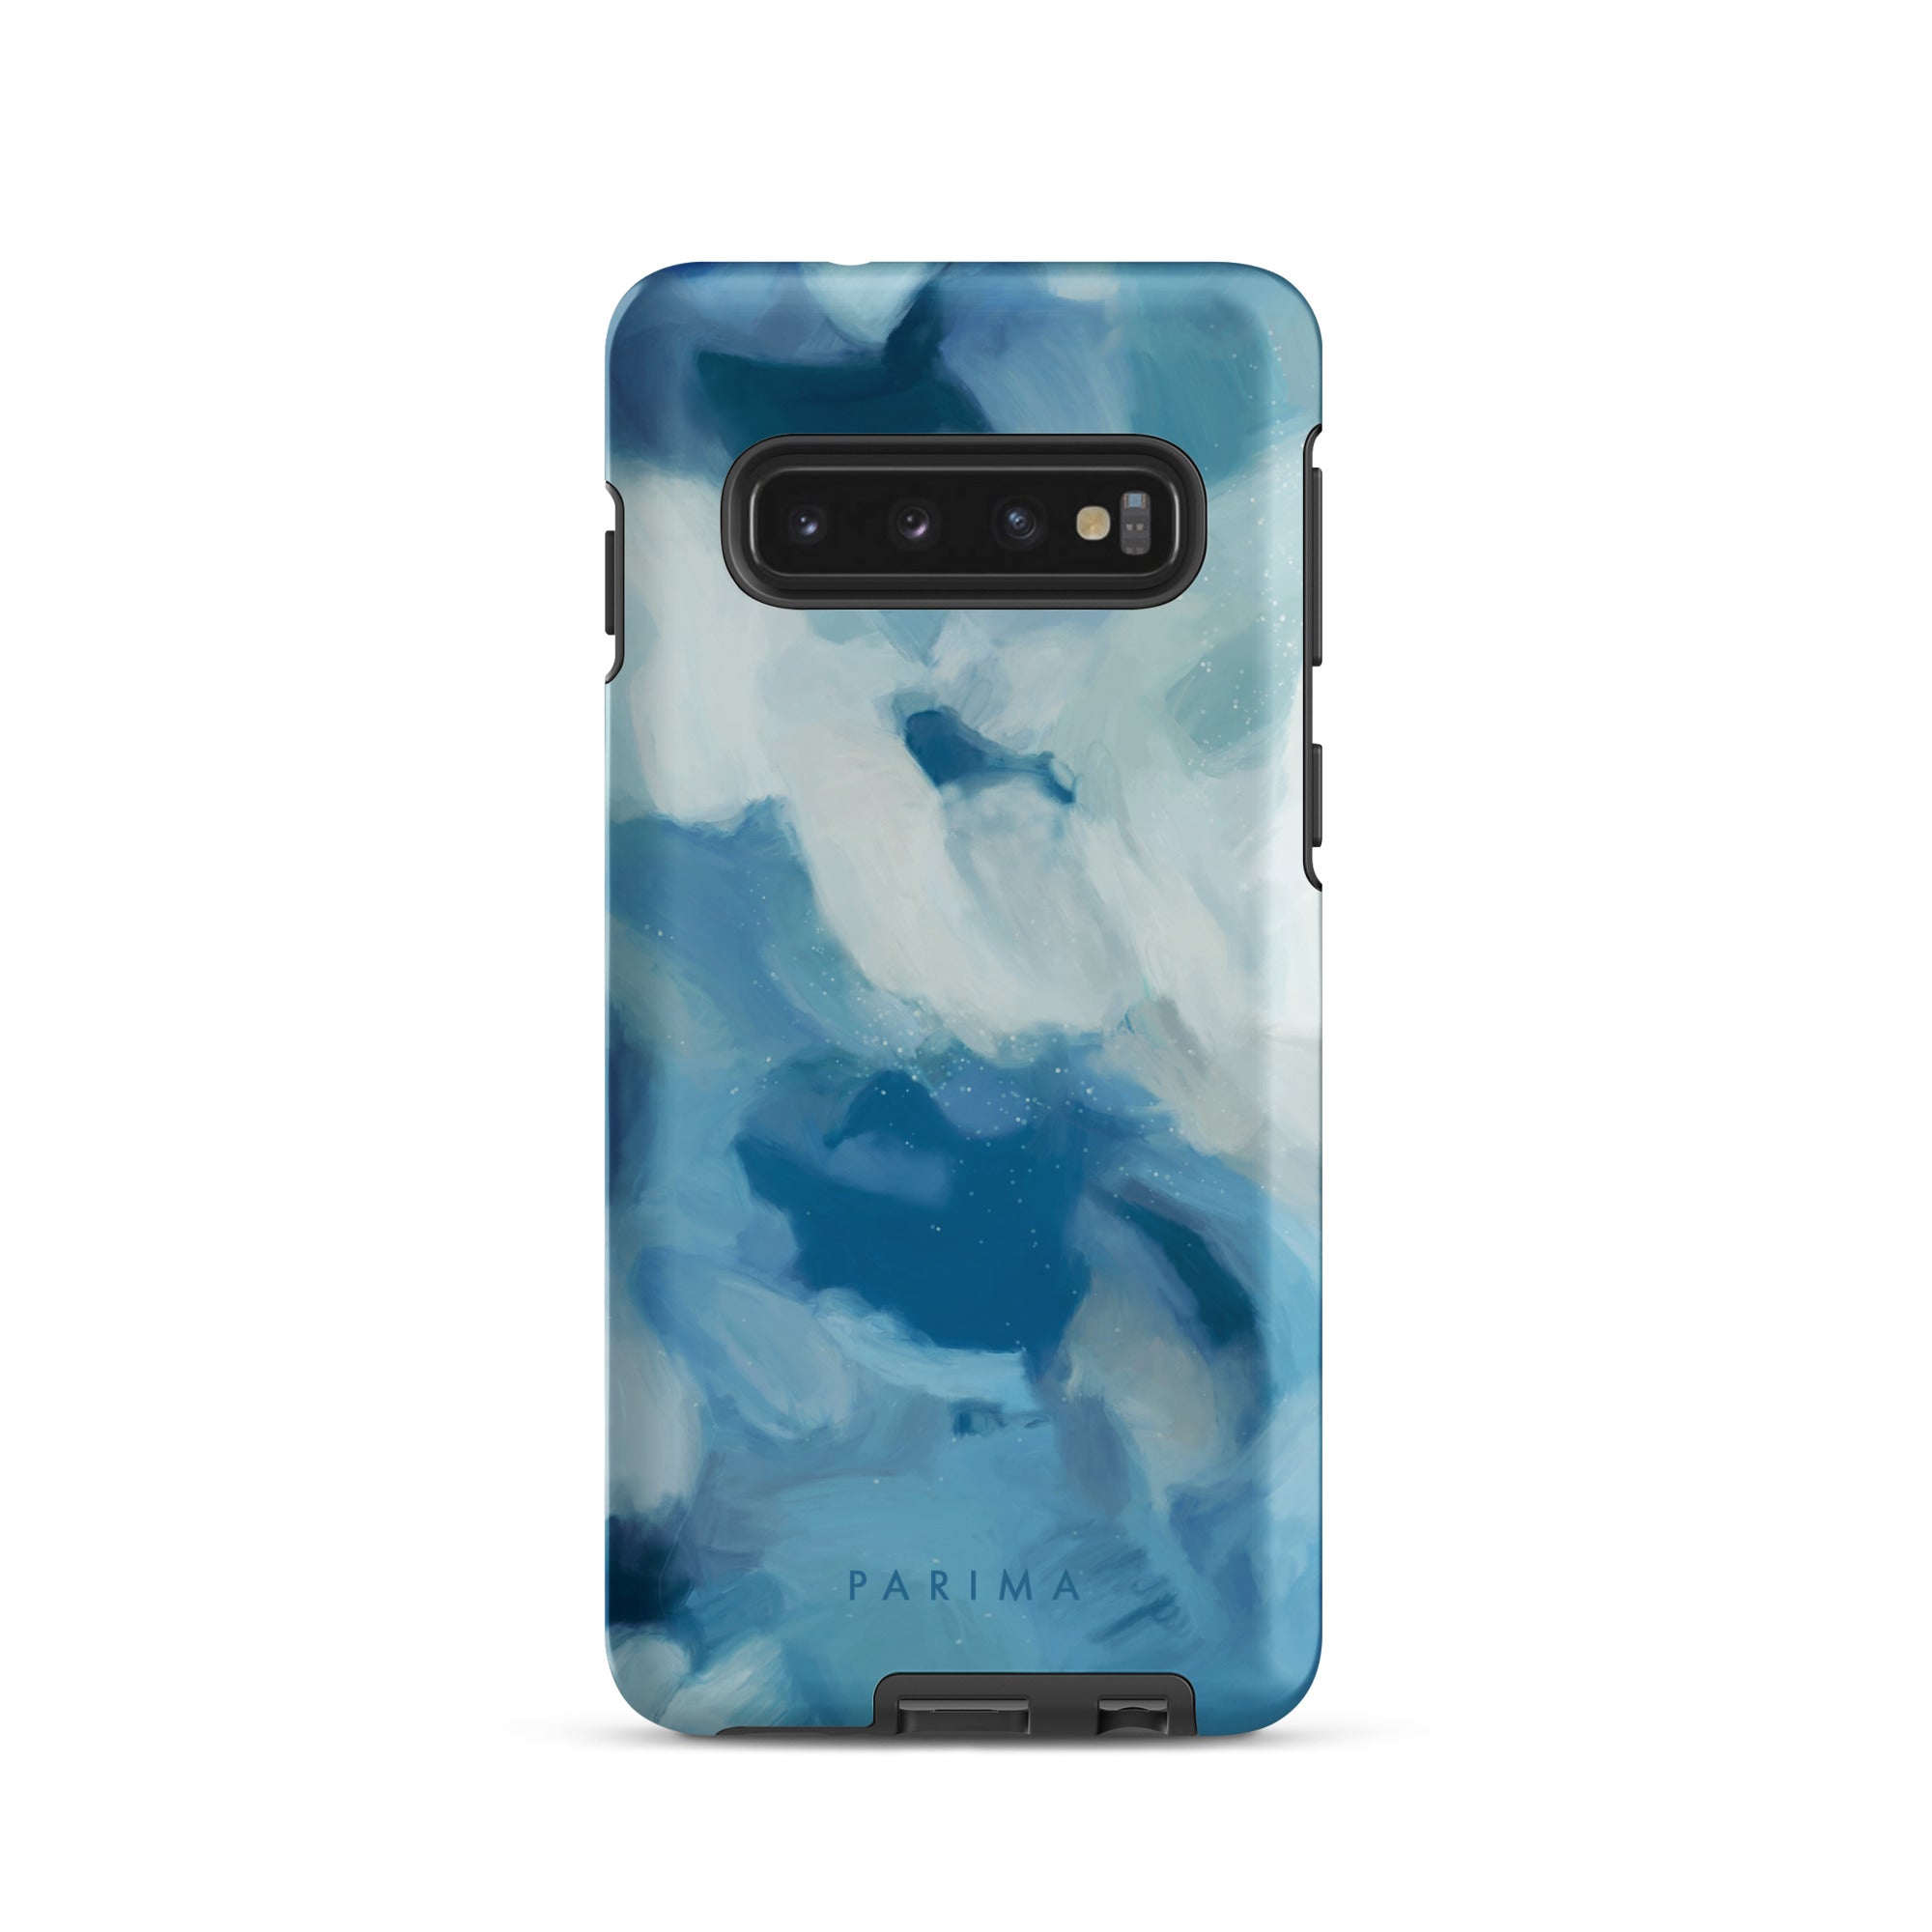 Liviana, blue abstract art on Samsung Galaxy S10 tough case by Parima Studio